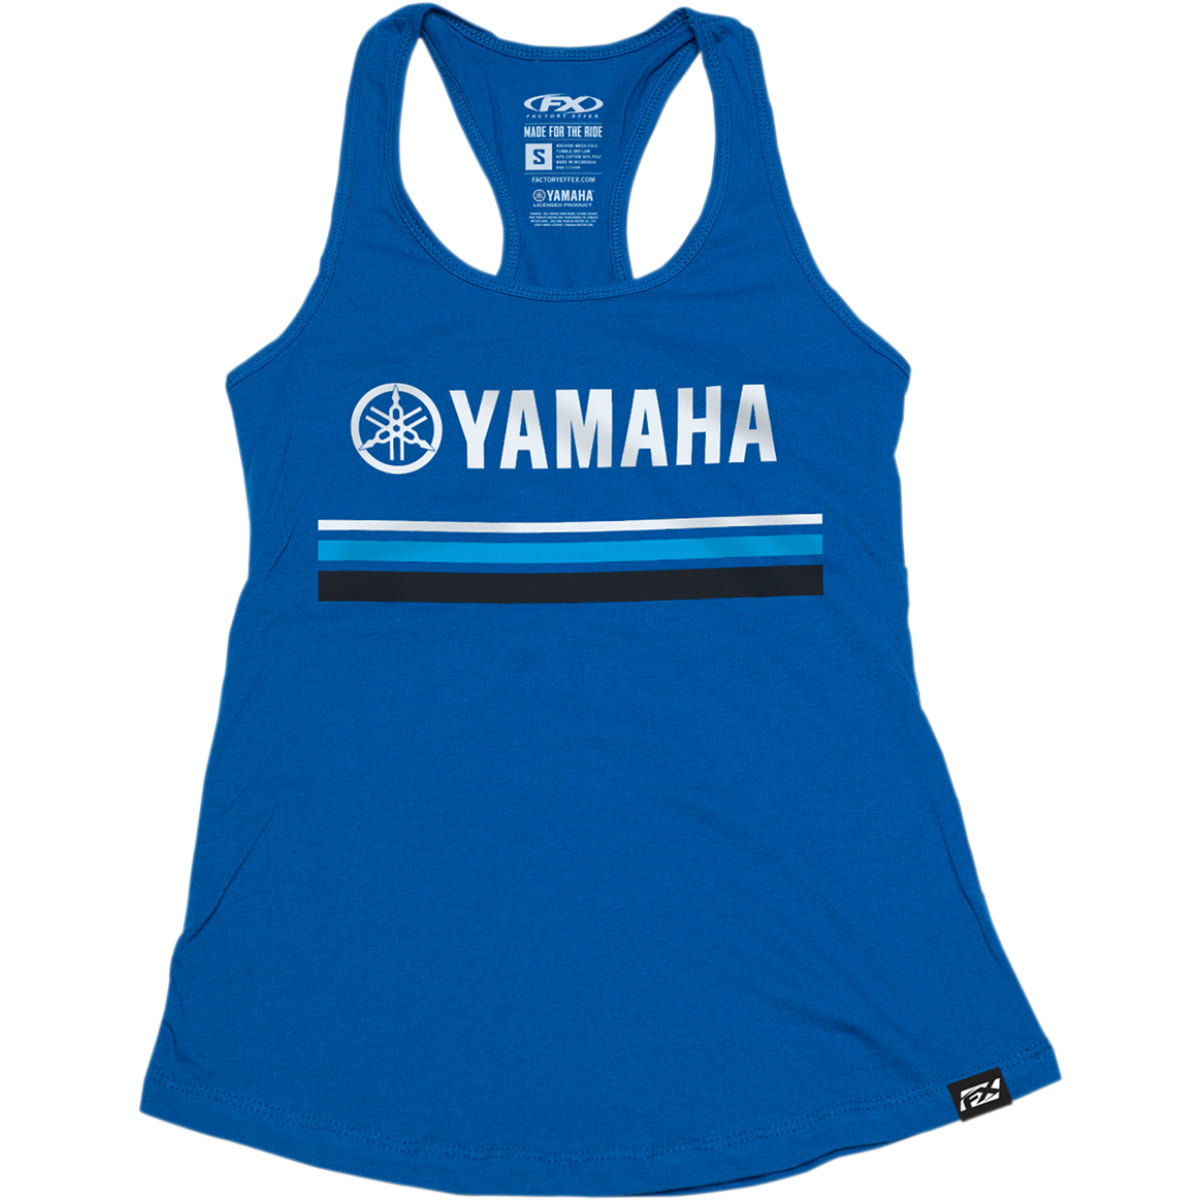 Factory Effex Yamaha Stripes Womens Tank Top Royal Blue Blue, Large 